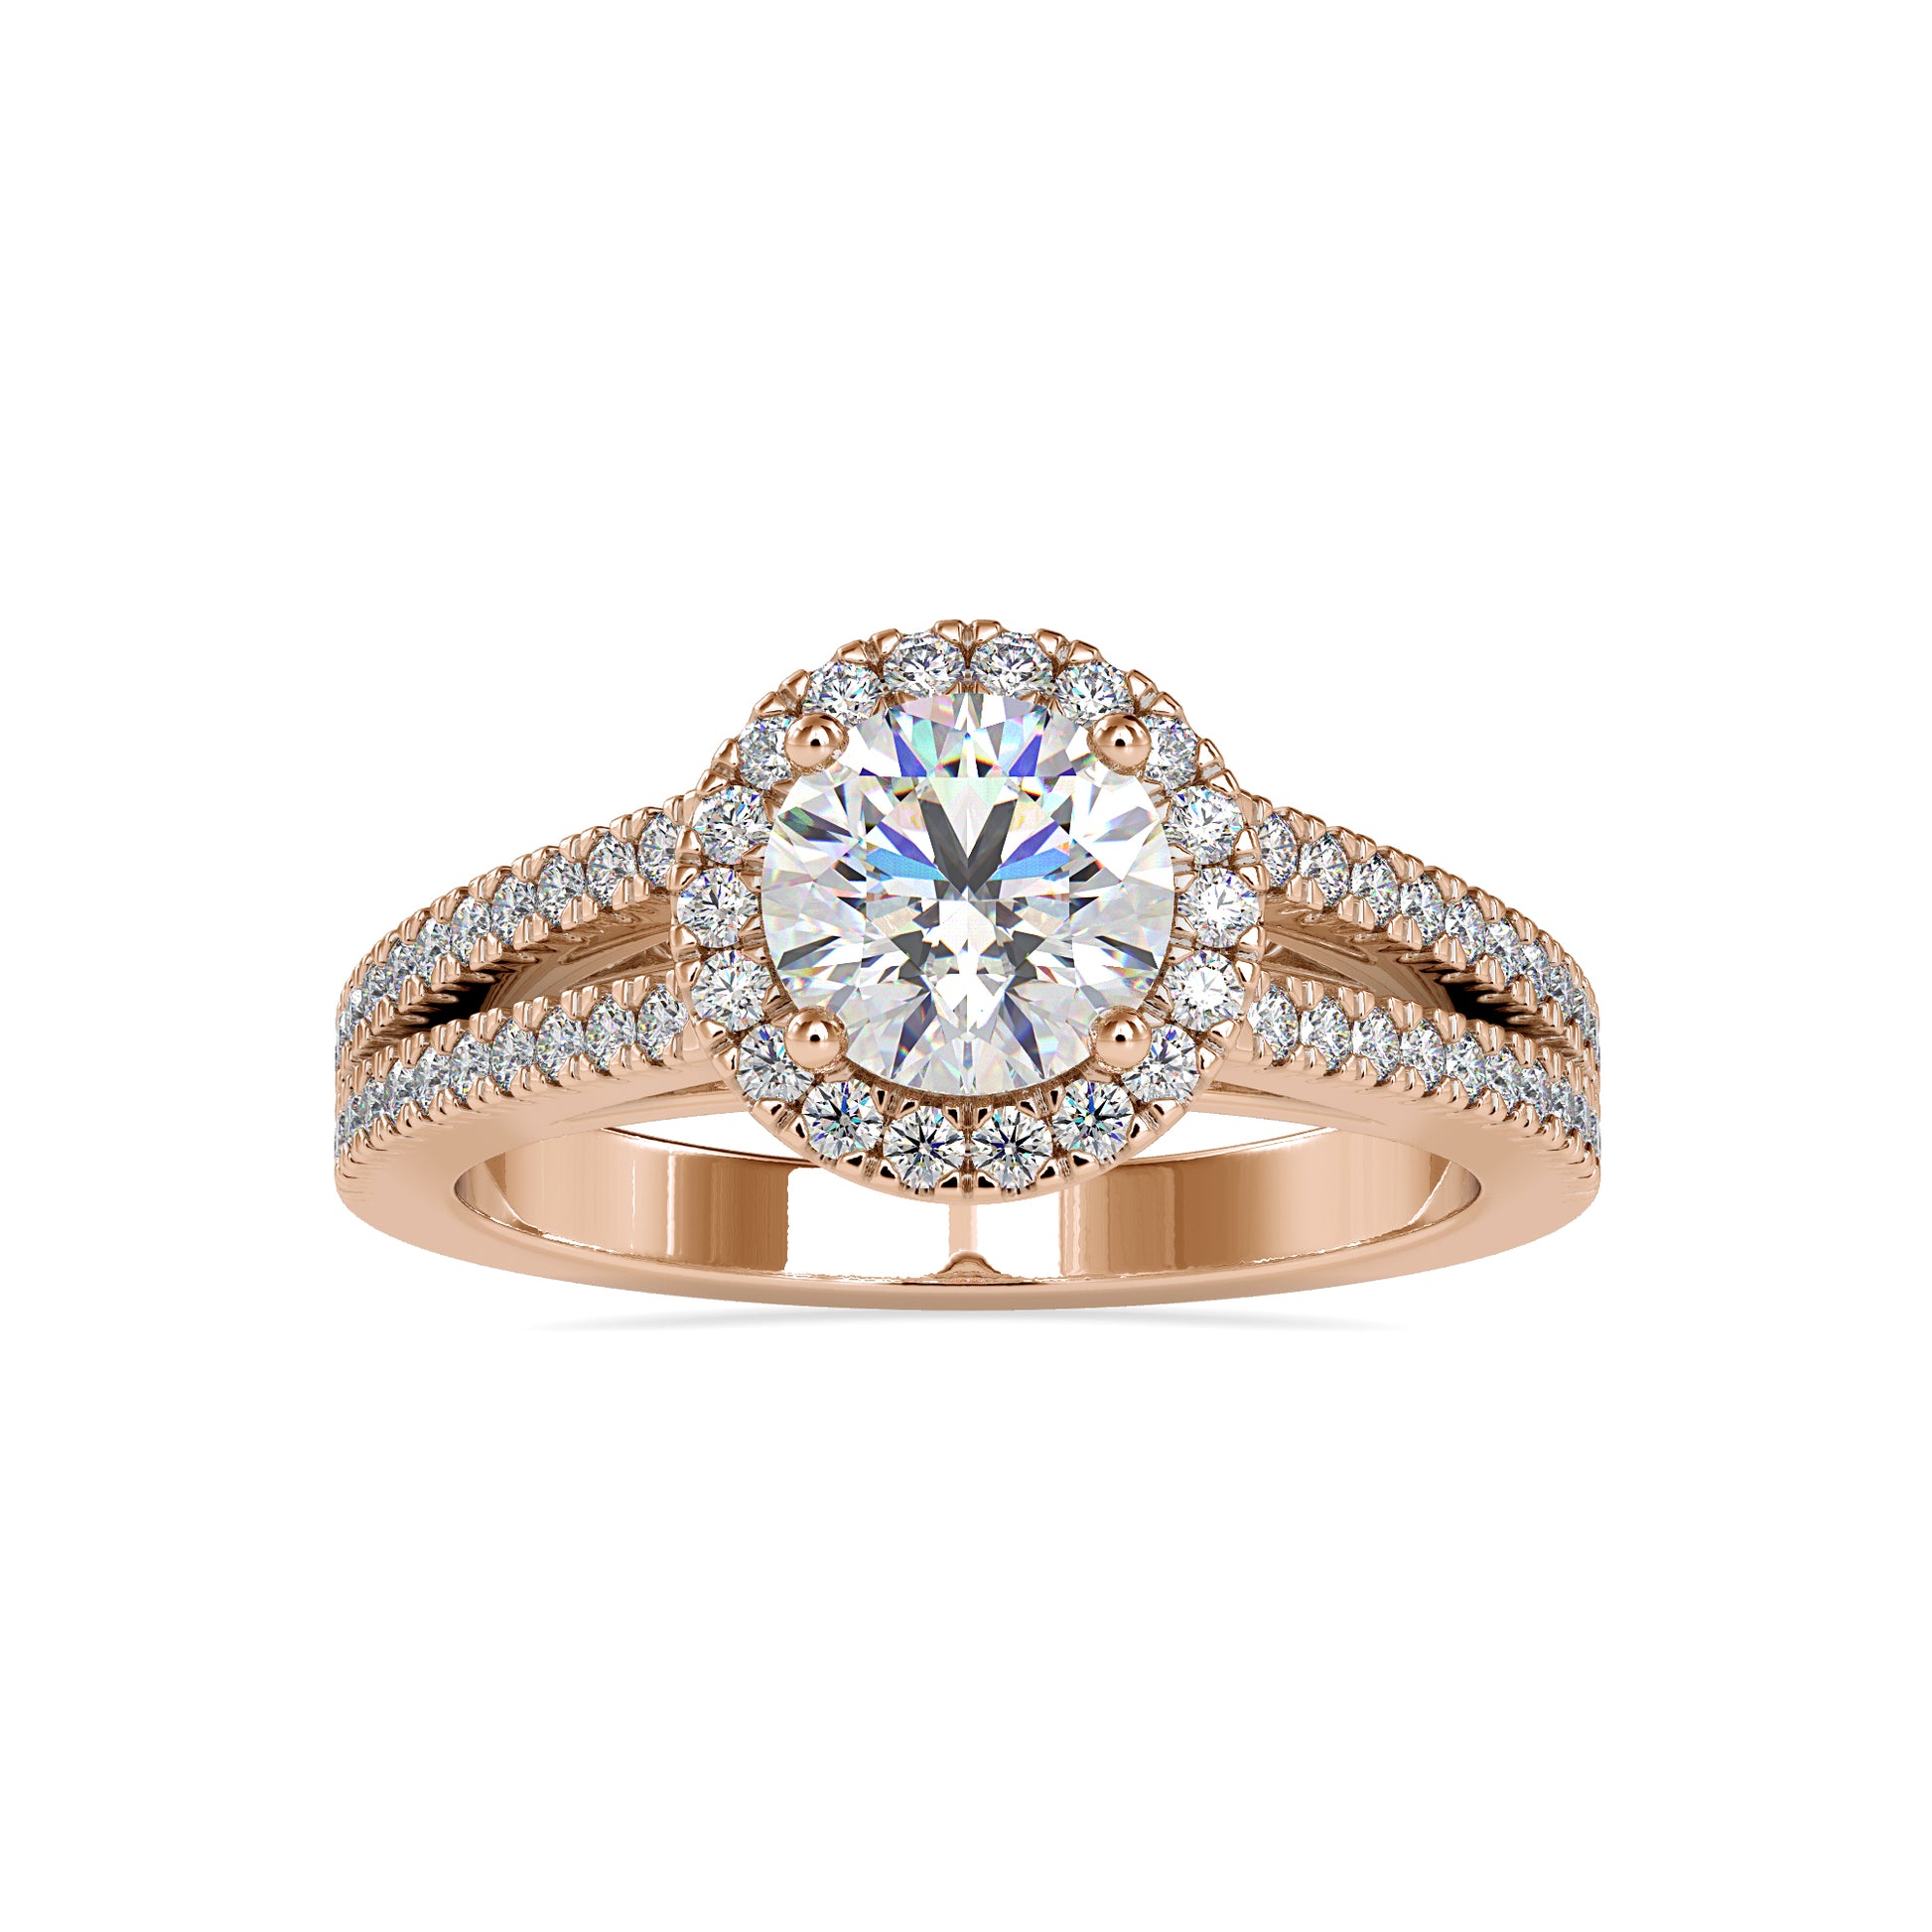 The Frida Ring - Vai RaThe Frida Ring - Vai Ra Moissanite diamond Halo Ring in Gold